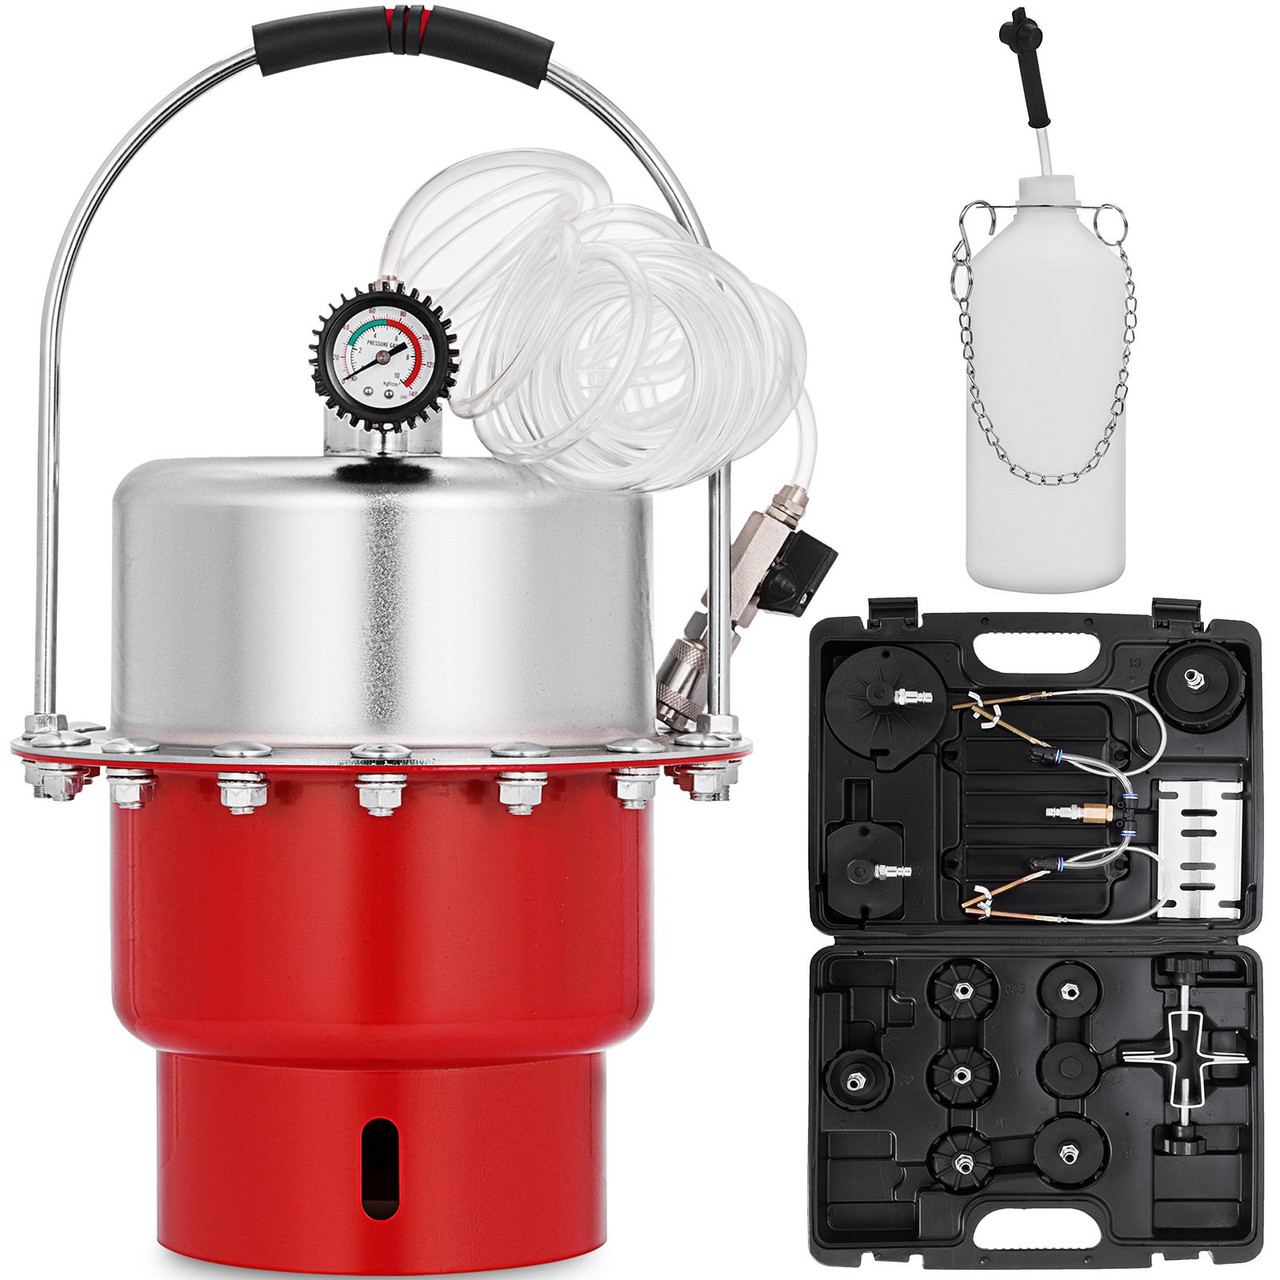 Pneumatic Air Pressure Bleeder Tool Kit Brake Bleeding Garage Workshop Mechanics